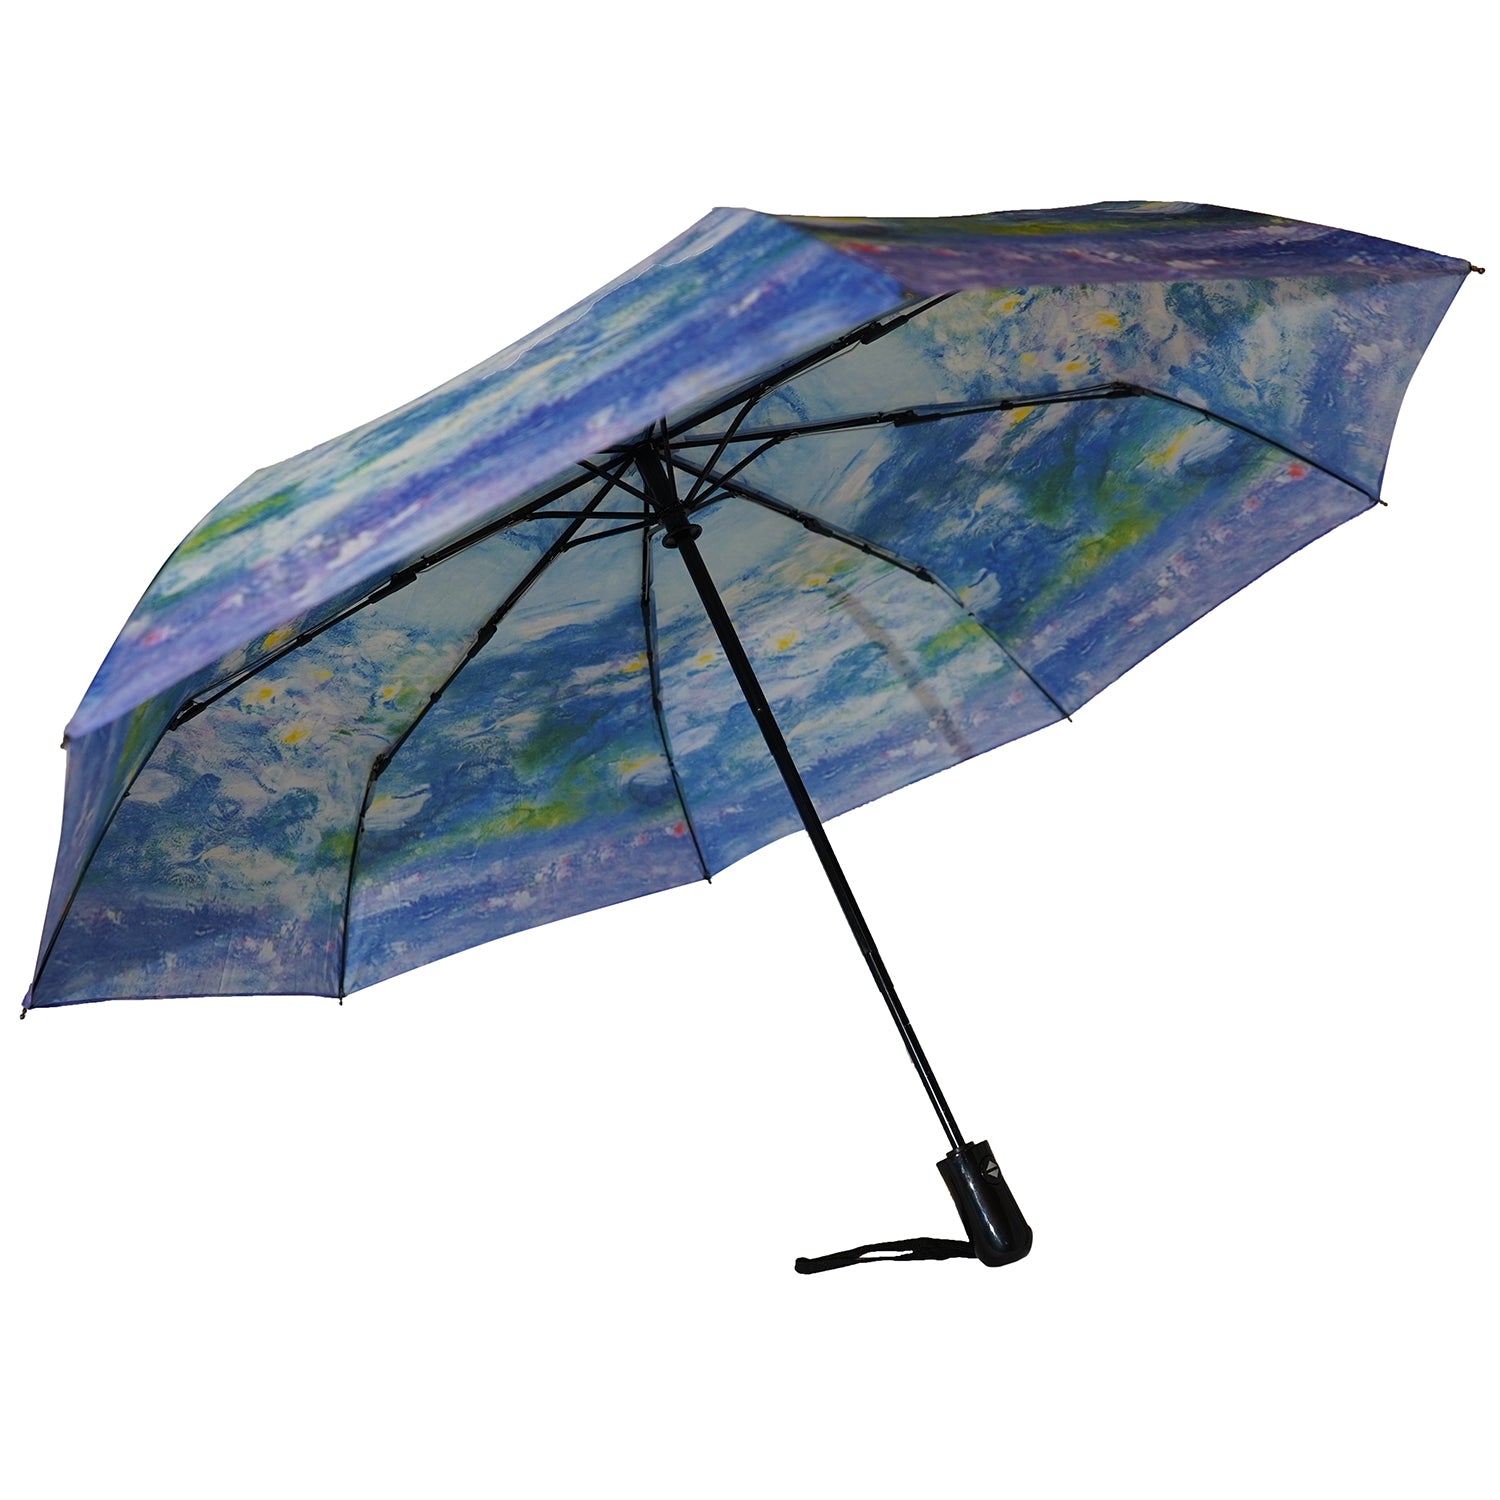 Claude Monet's "Waterlilies" Compact Collapsible Umbrella